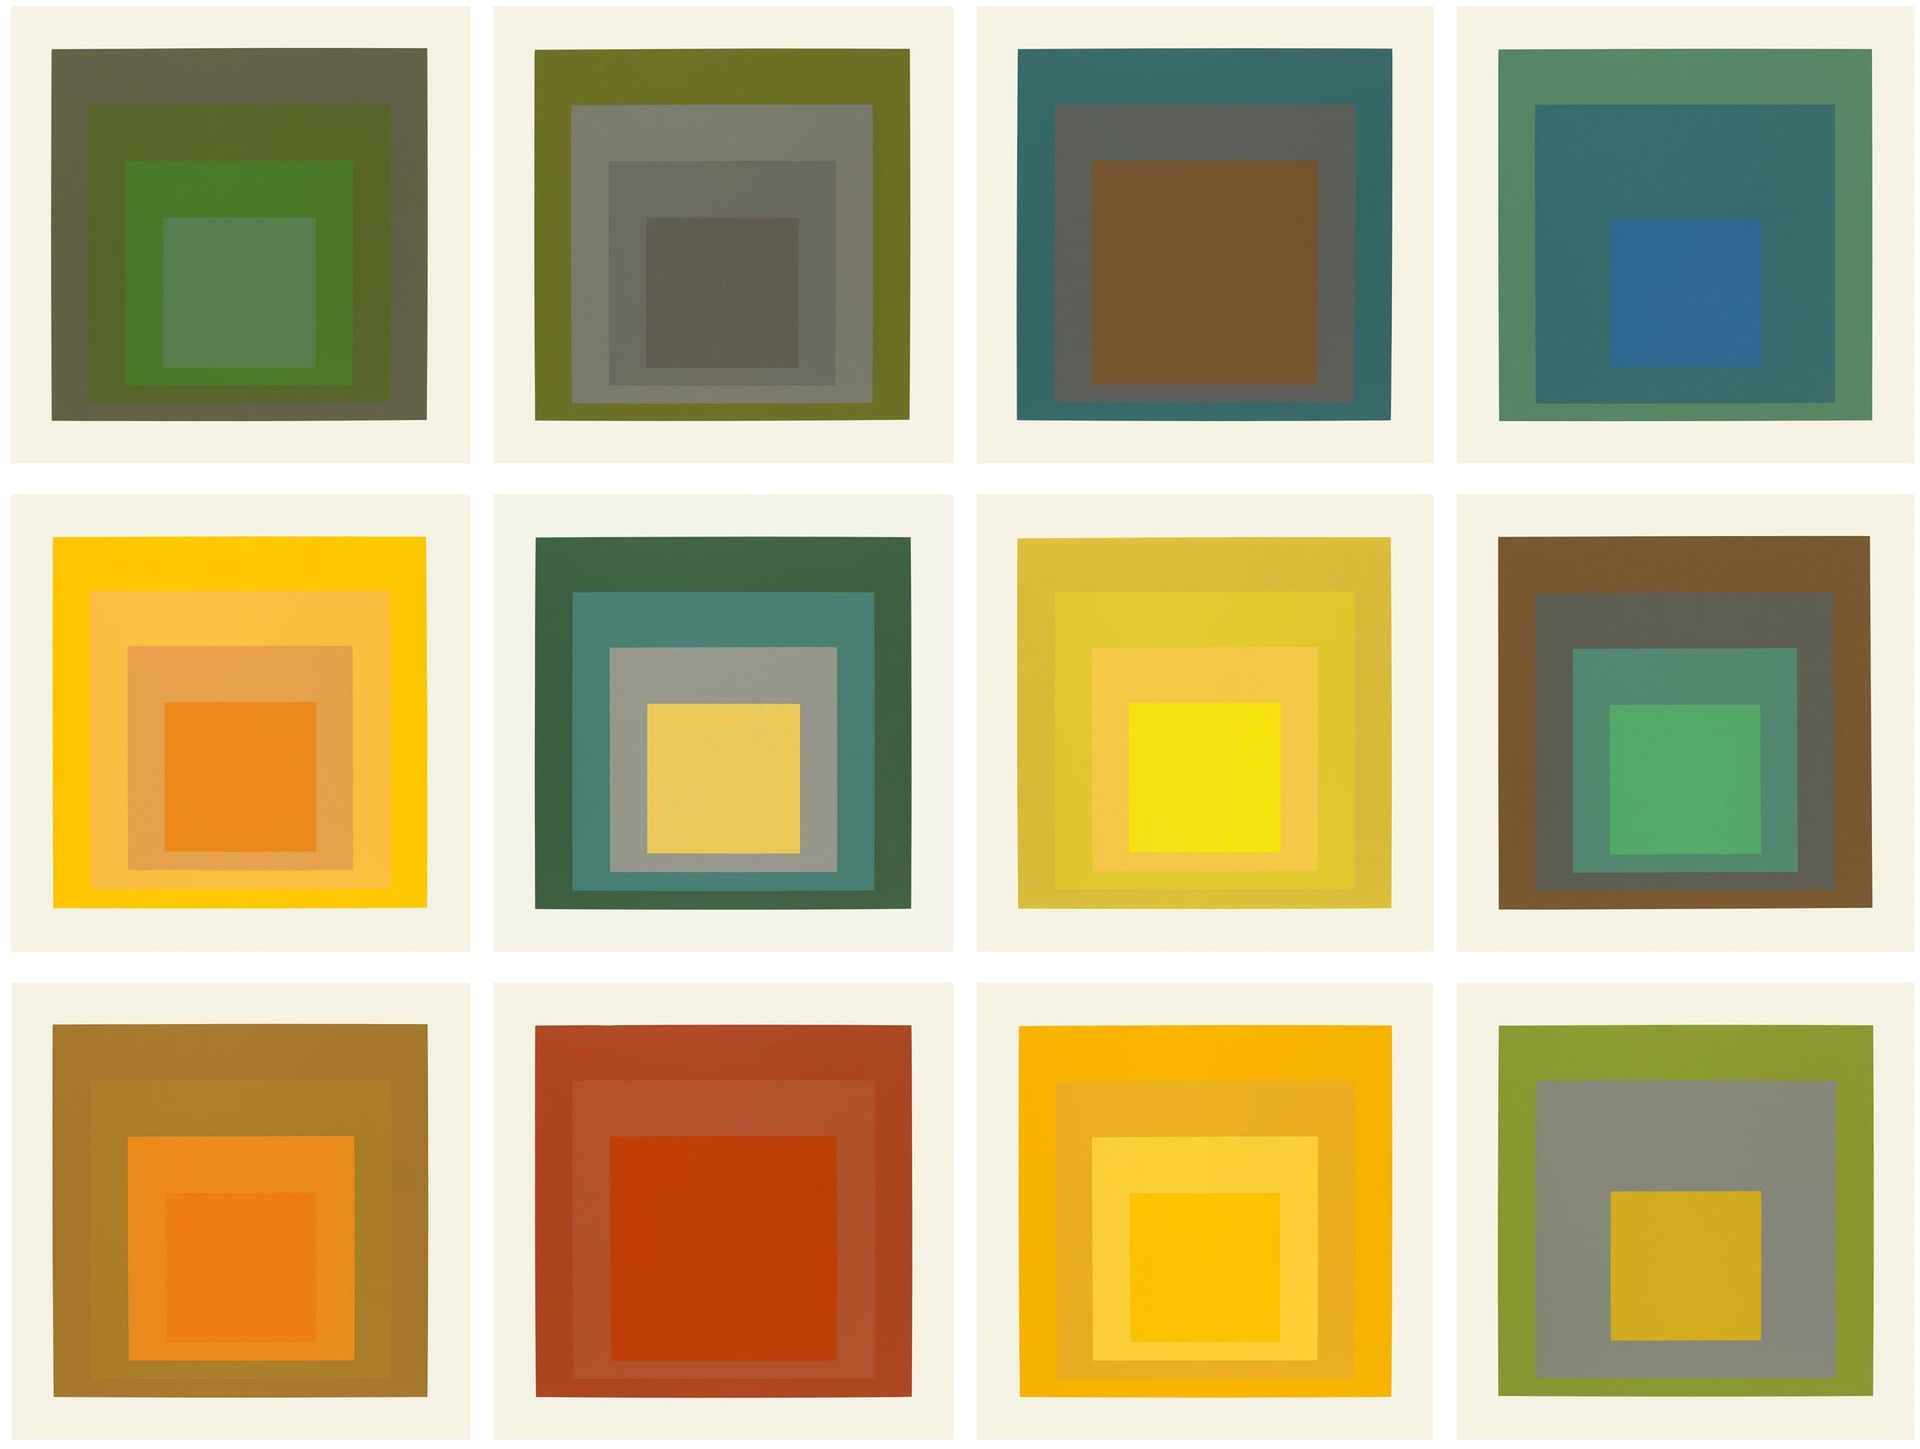 Josef Albers 约瑟夫-阿尔贝斯



SP（向广场致敬）

1967



12张彩色绢印纸板，每张61.5 x 61.5厘米。每件作品都有图案、日&hellip;